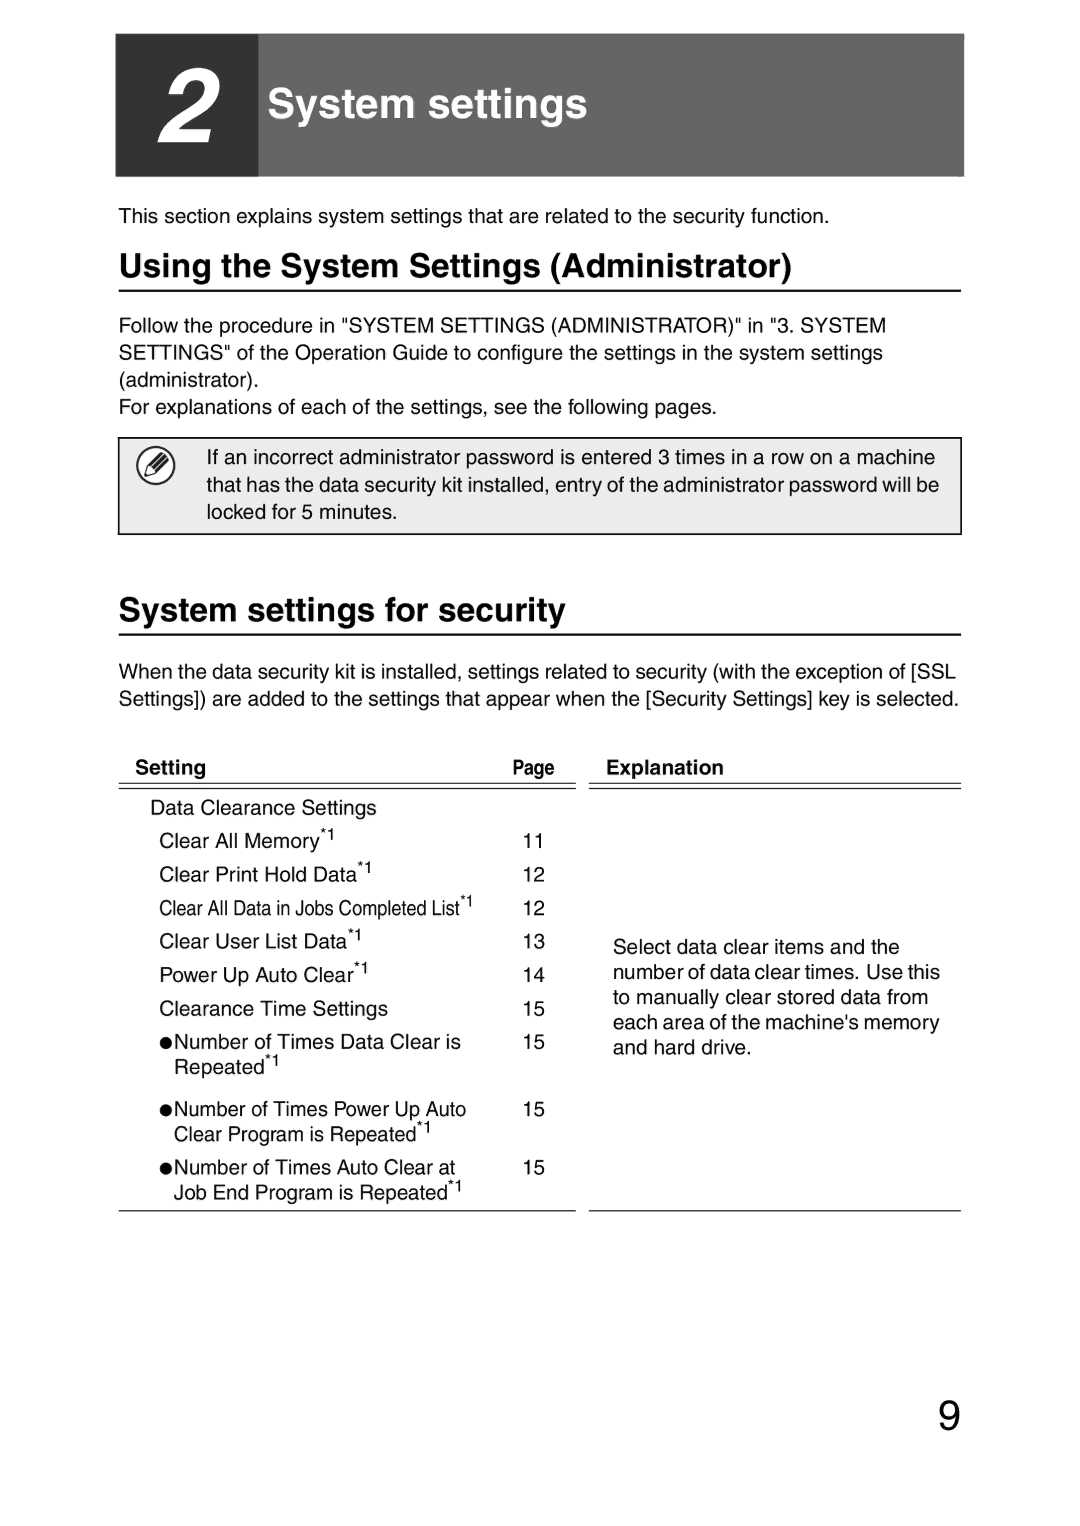 Sharp MX-FR20U, MX-FR21U manual Using the System Settings Administrator, System settings for security, Explanation 